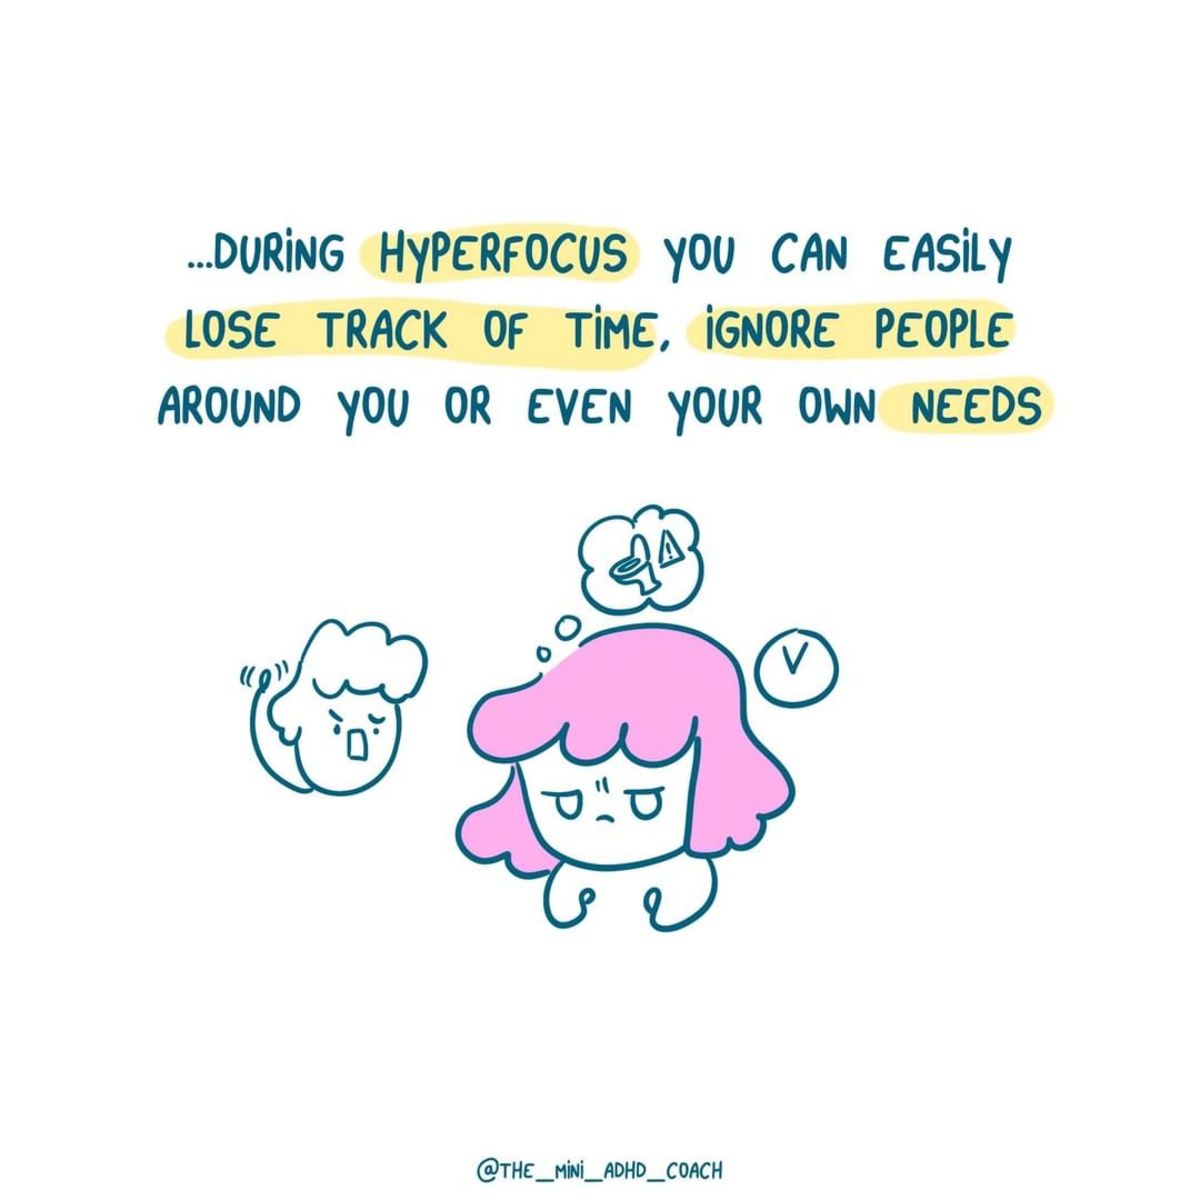 What Is Hyperfocus?